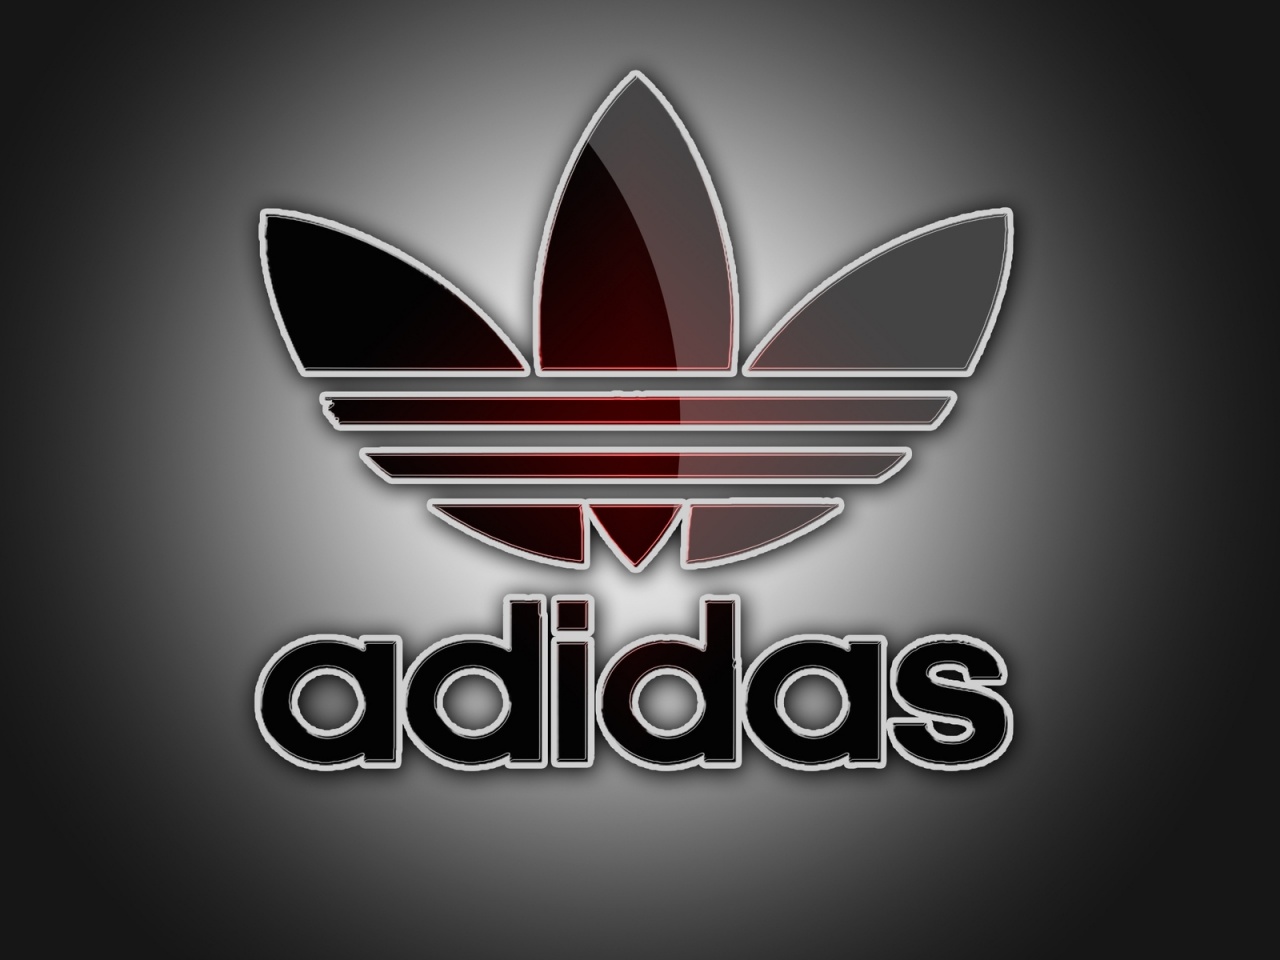 Adidas Cool Logo